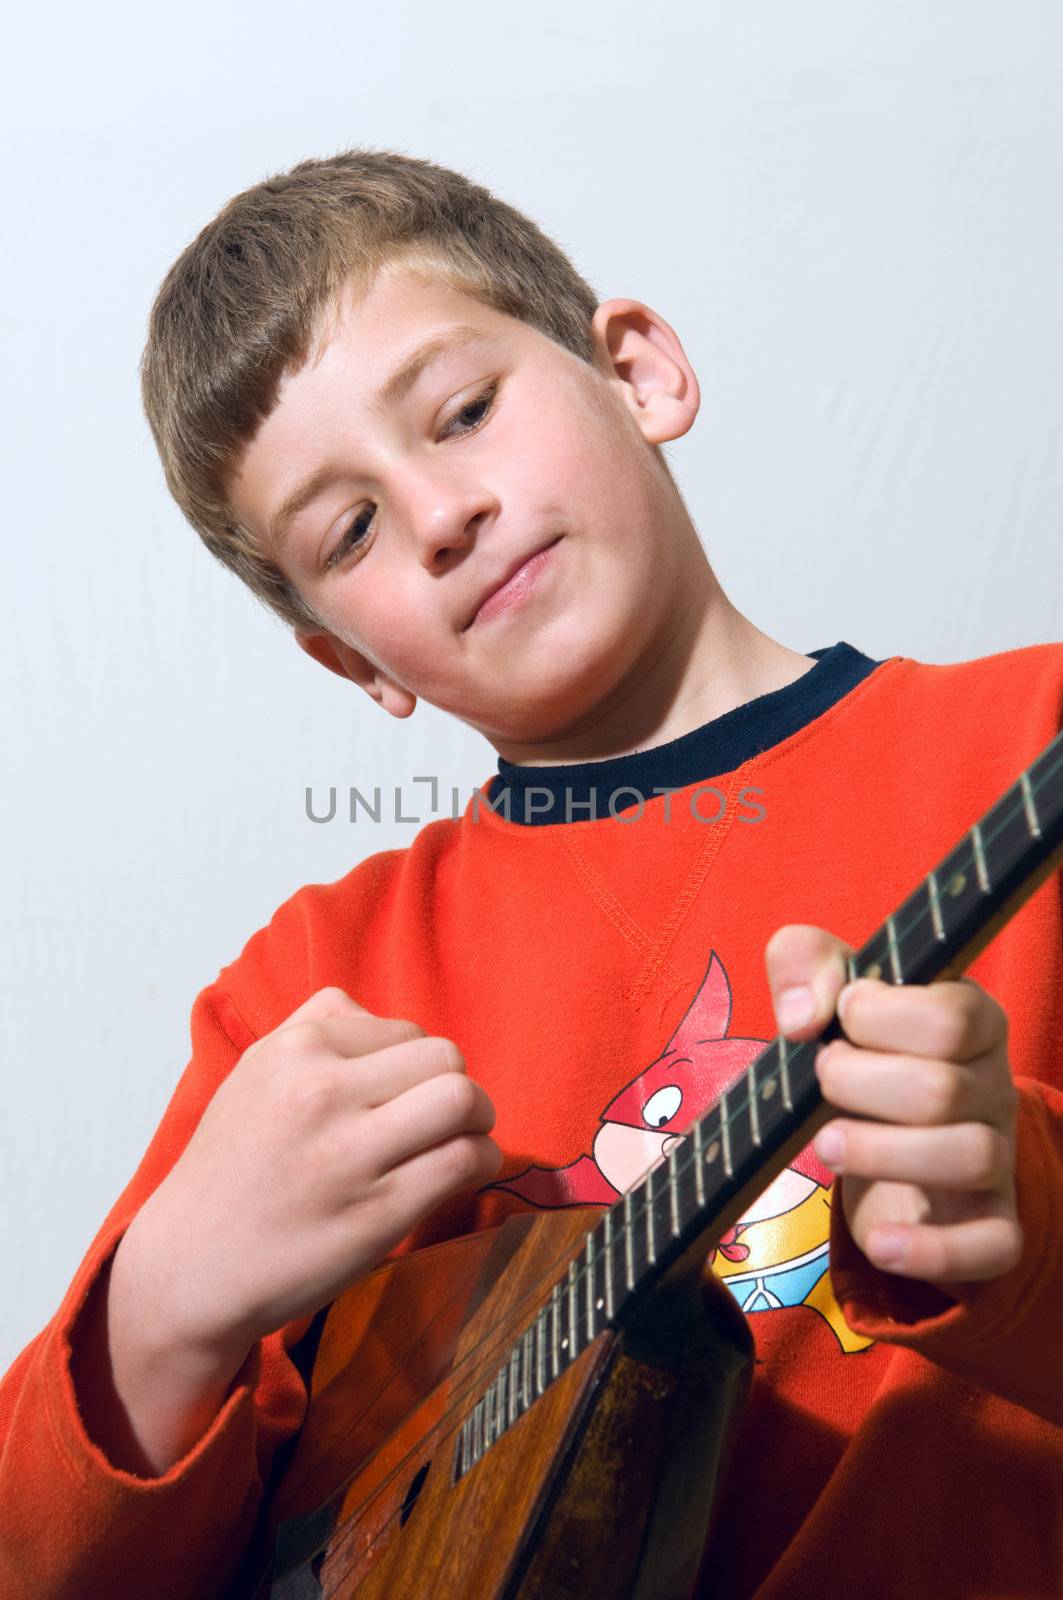 	
A boy plays balalaika Russian folk musical instrument